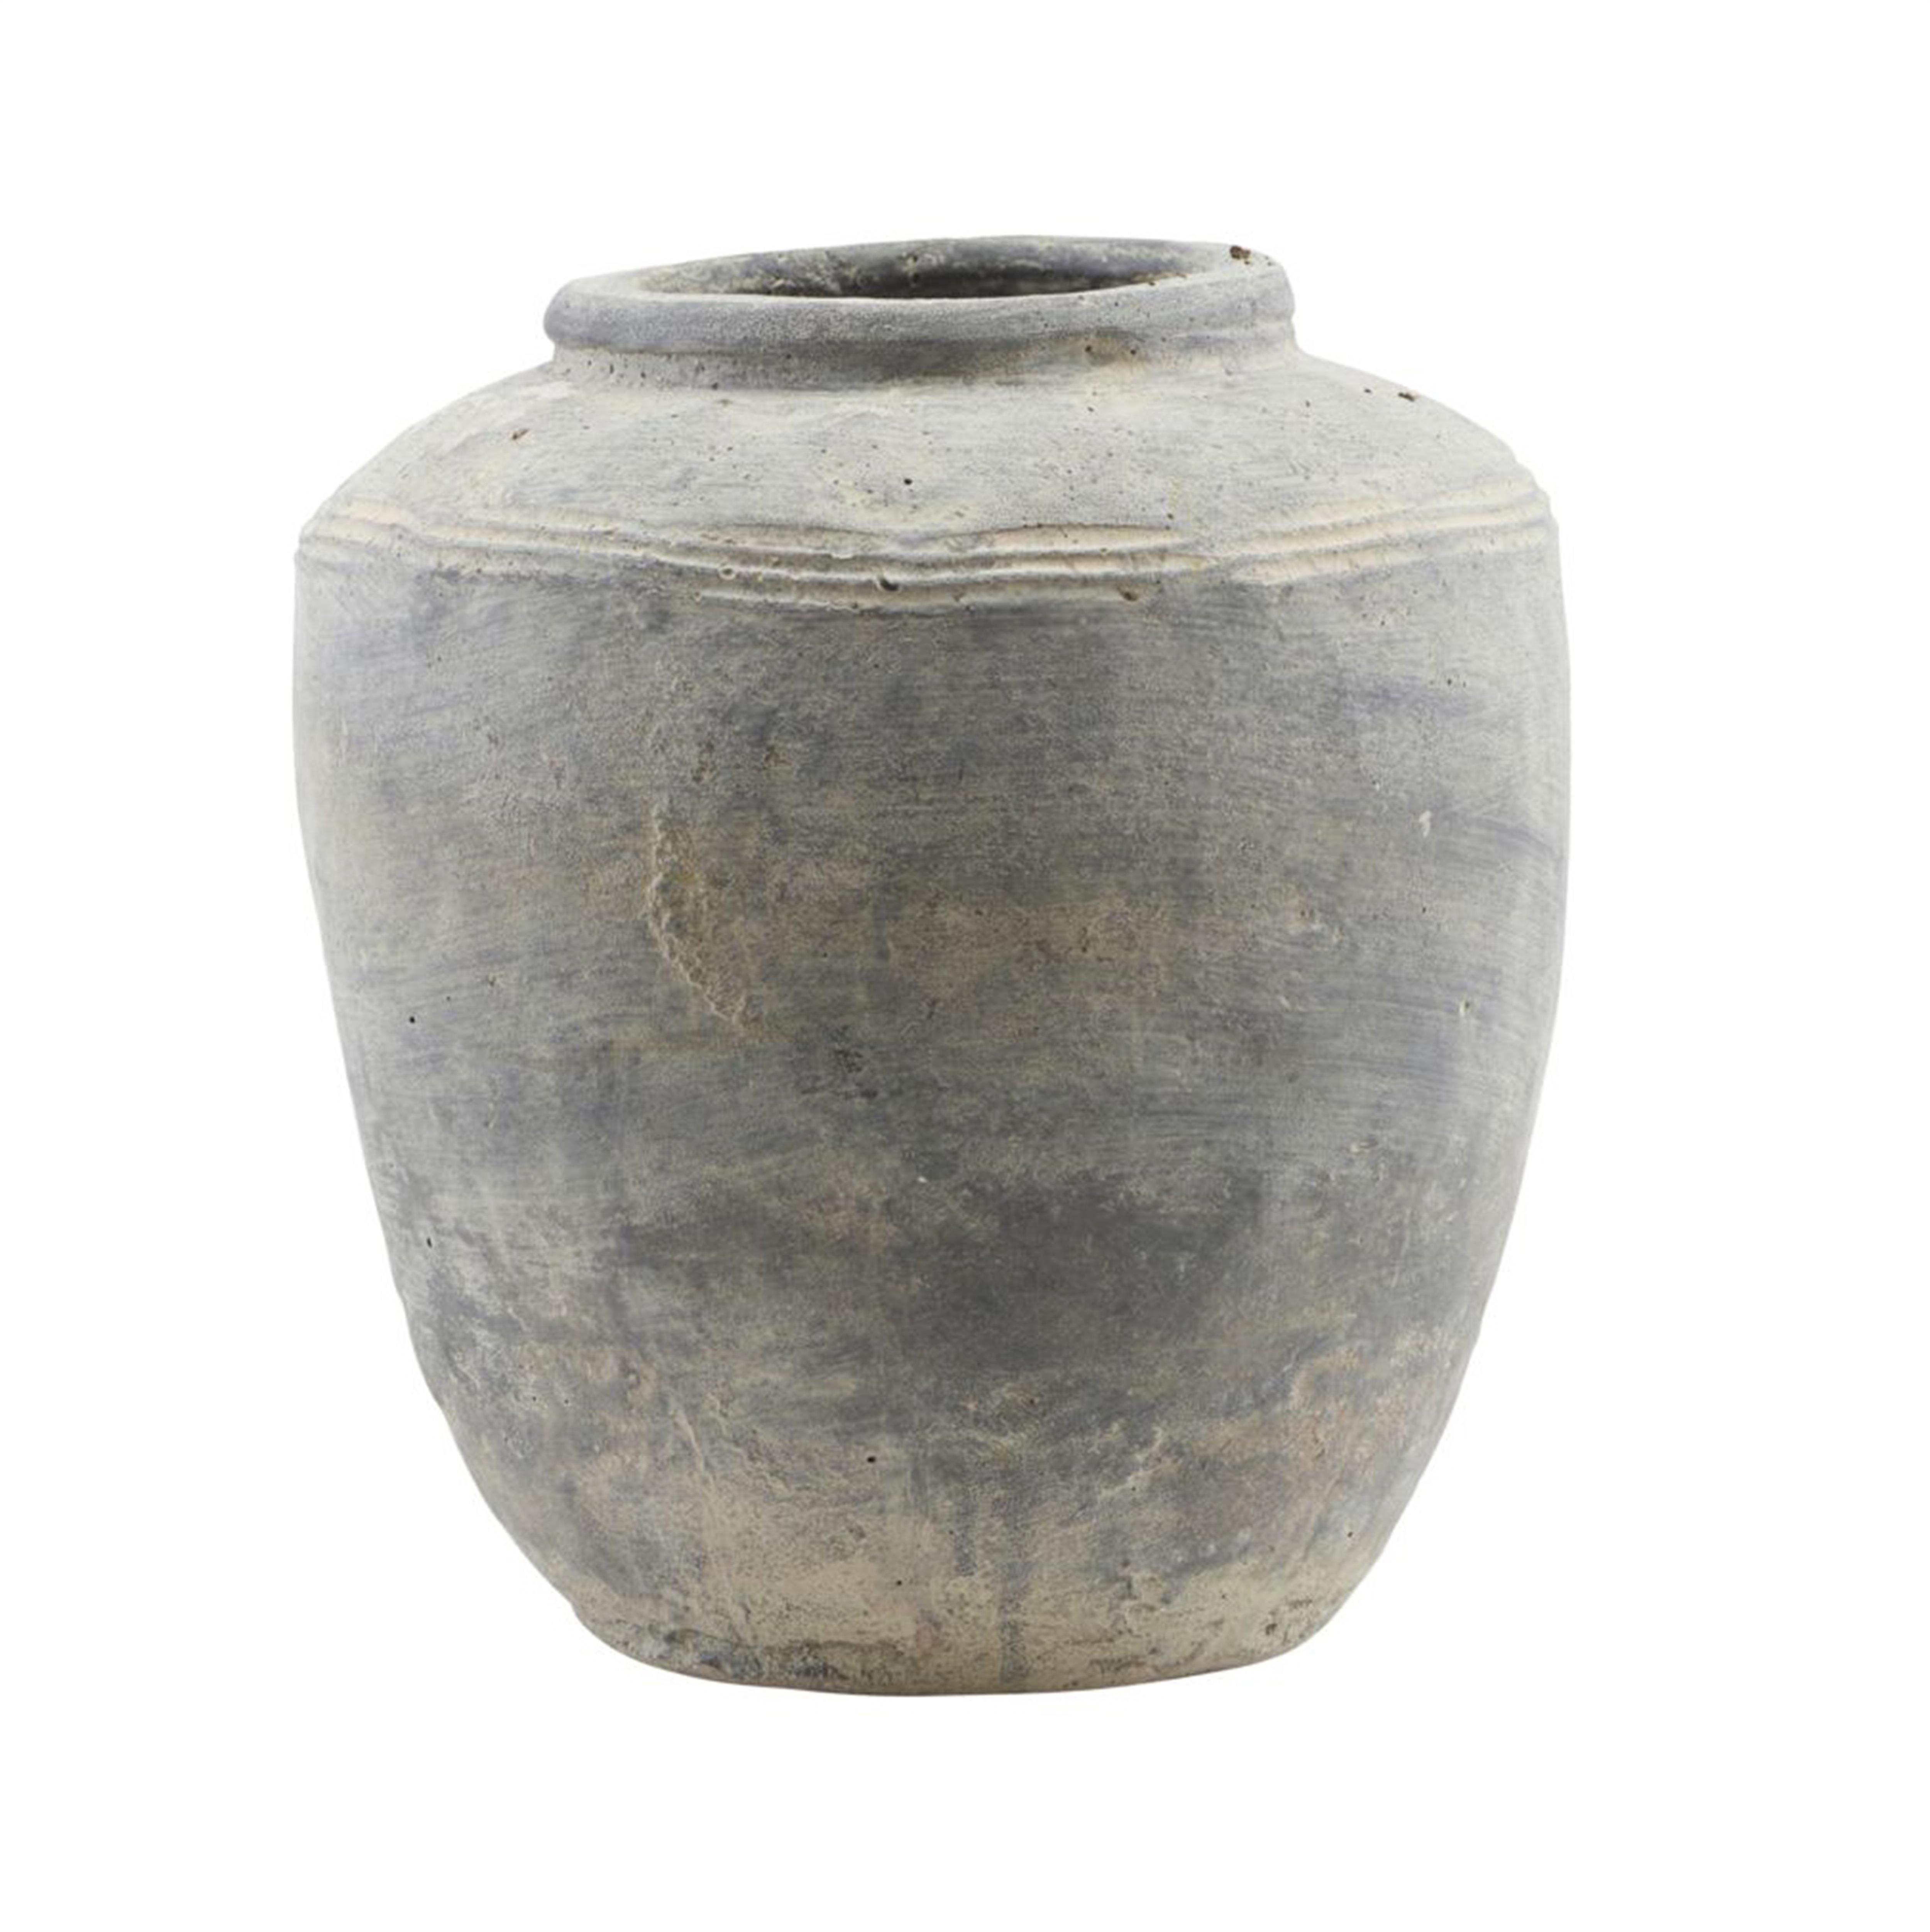 Rustik vase concrete from House Doctor - NordicNest.com